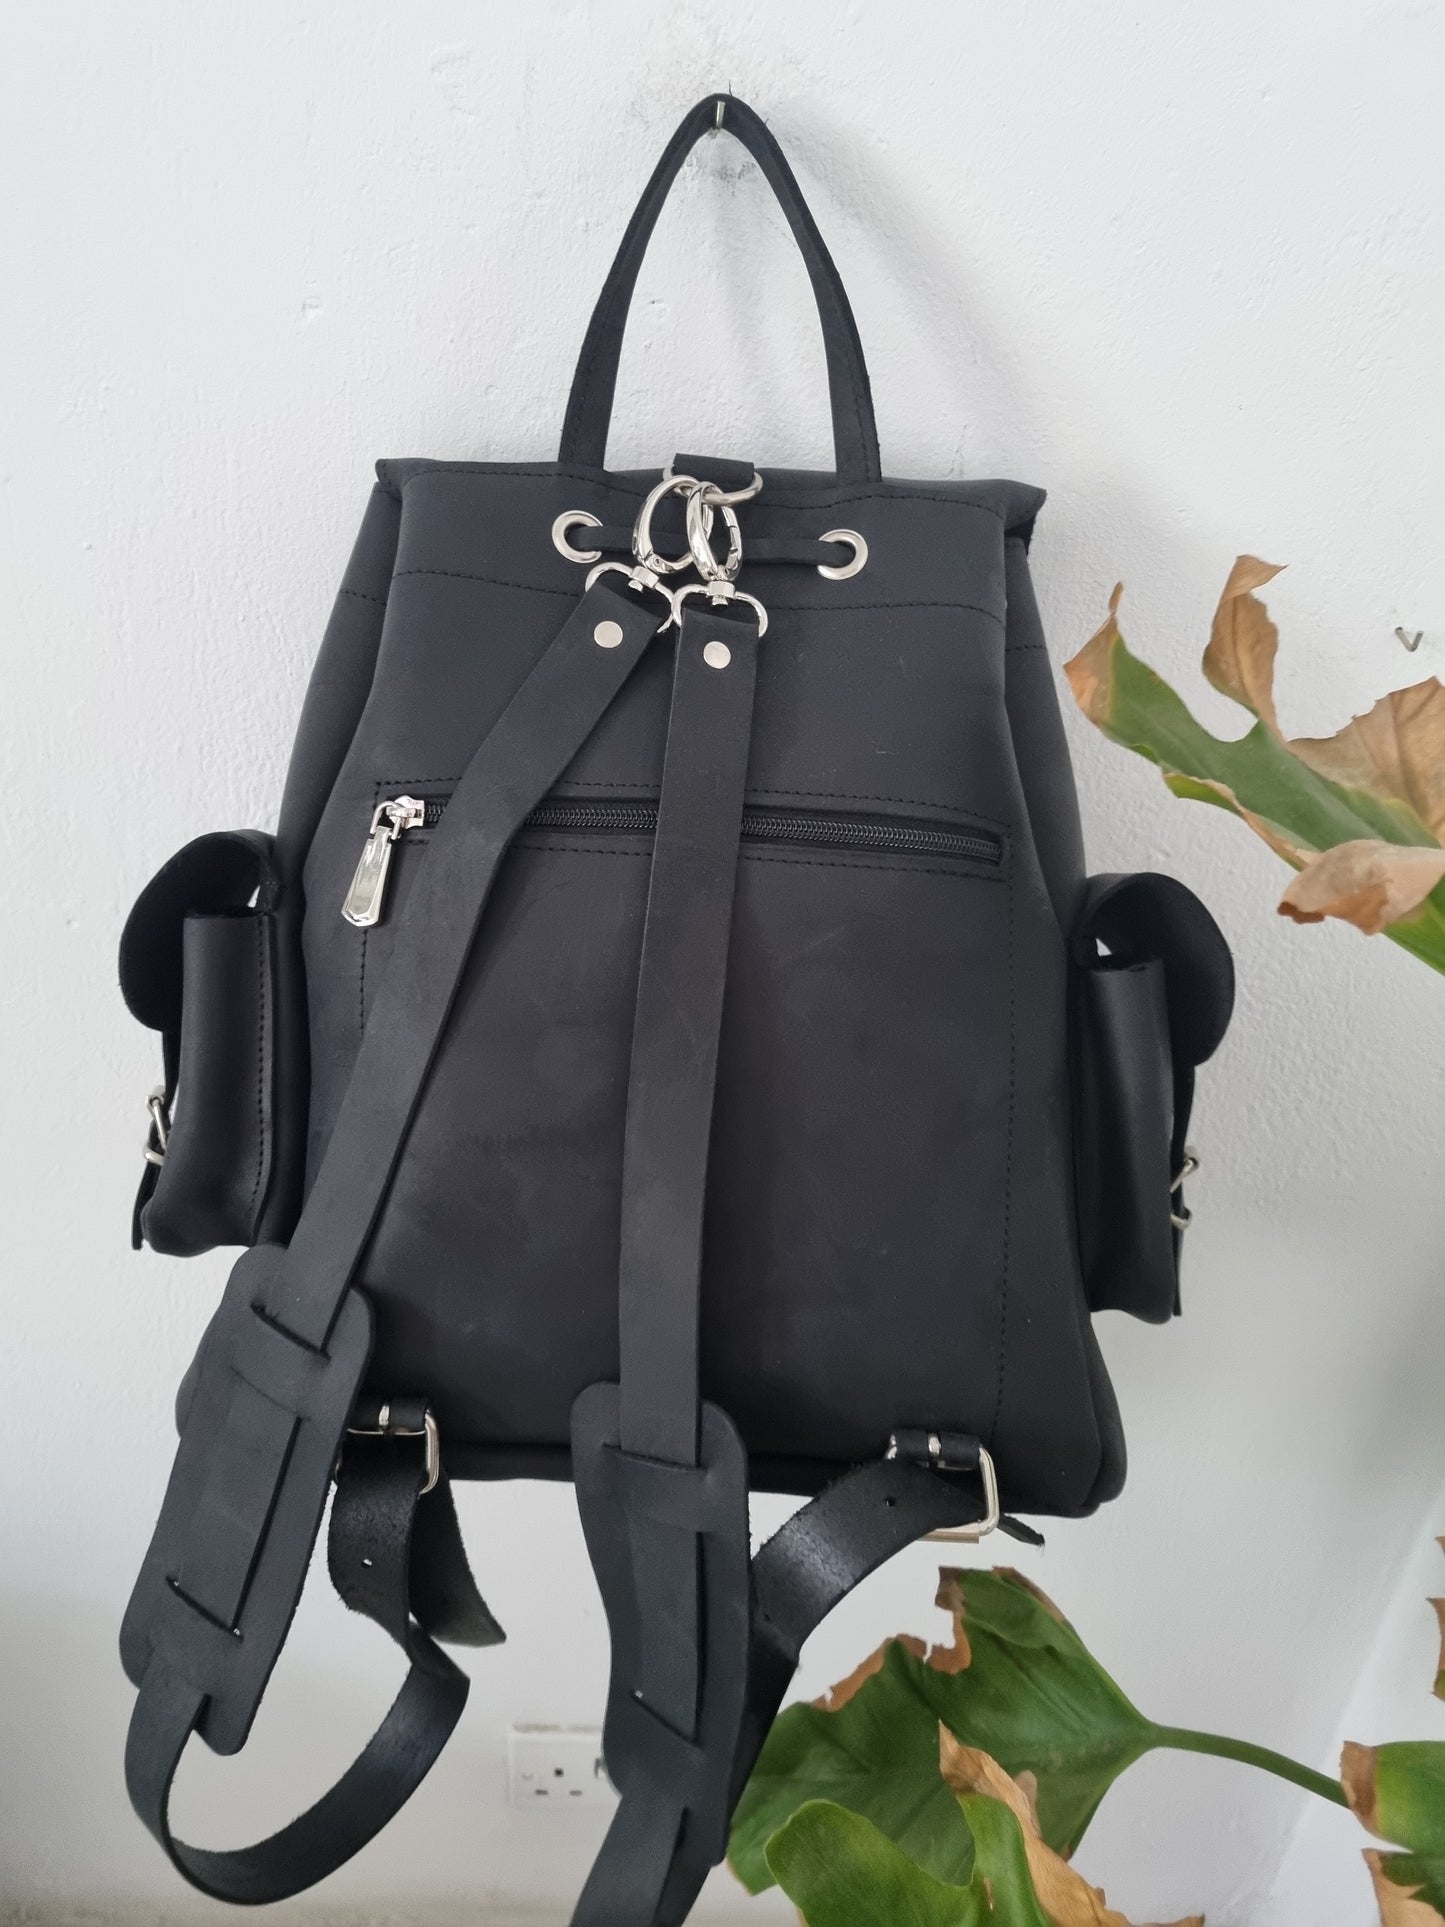 All black leather bag